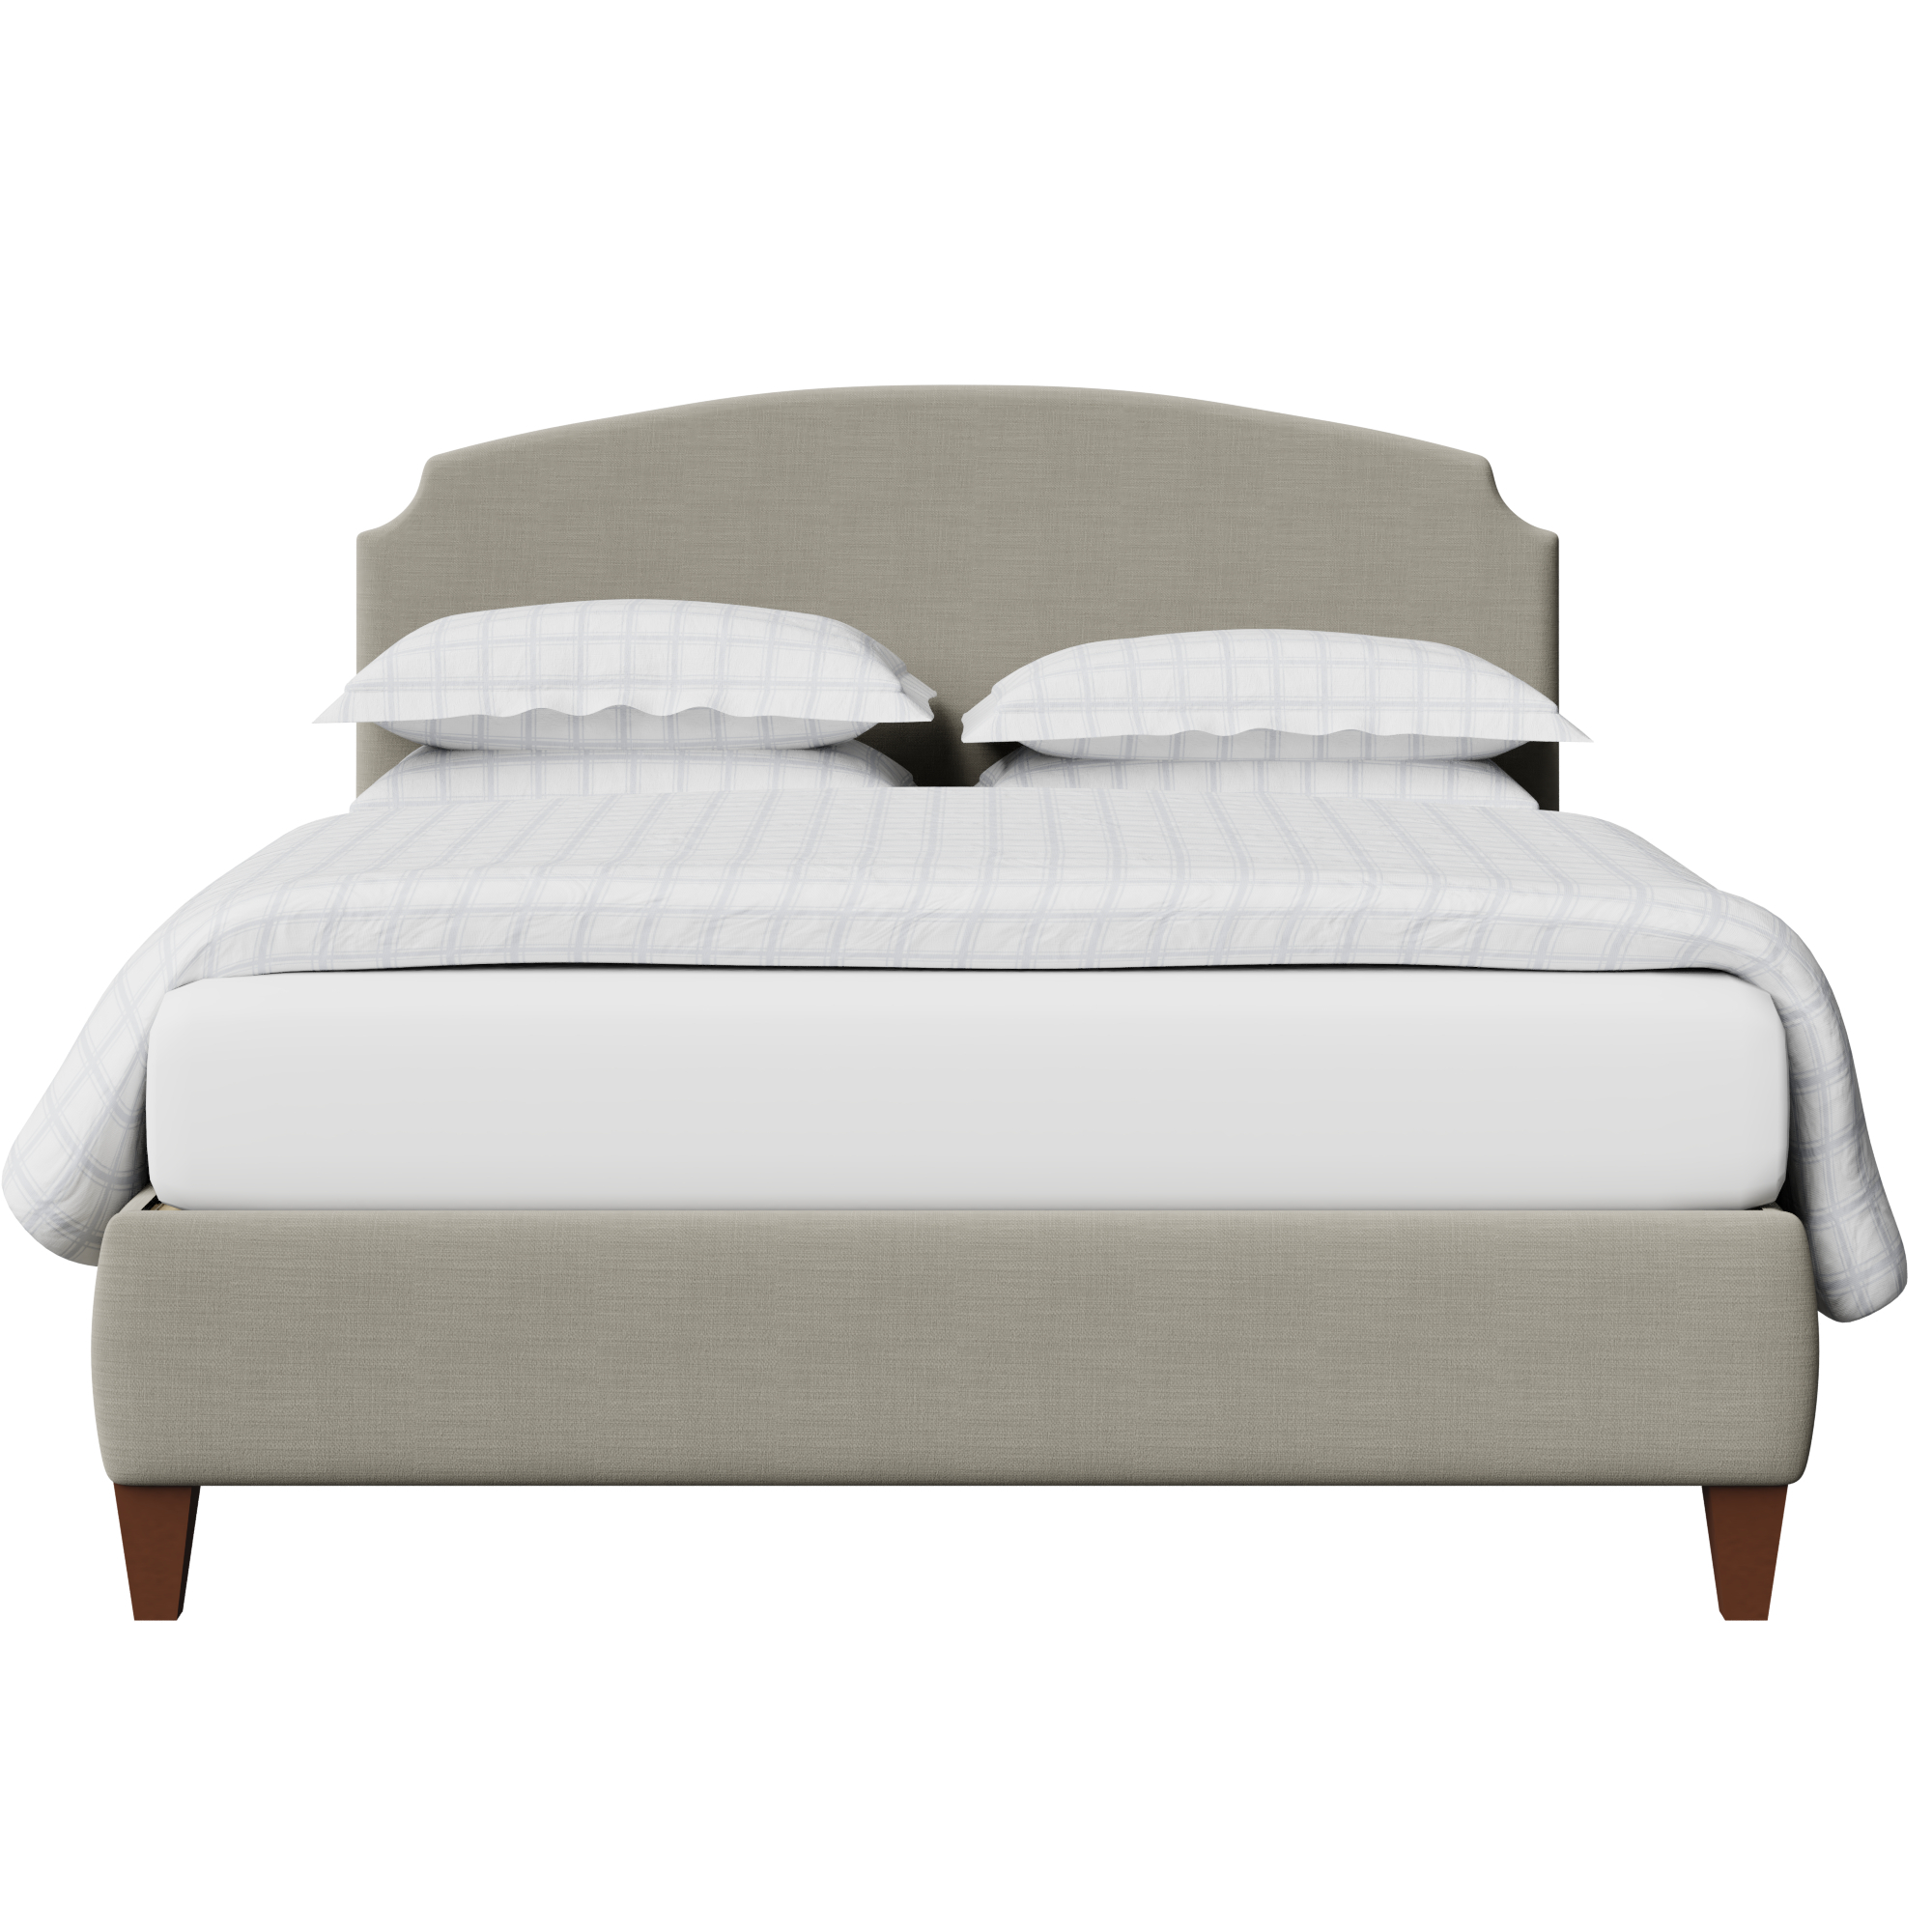 Lide cama tapizada en tela gris